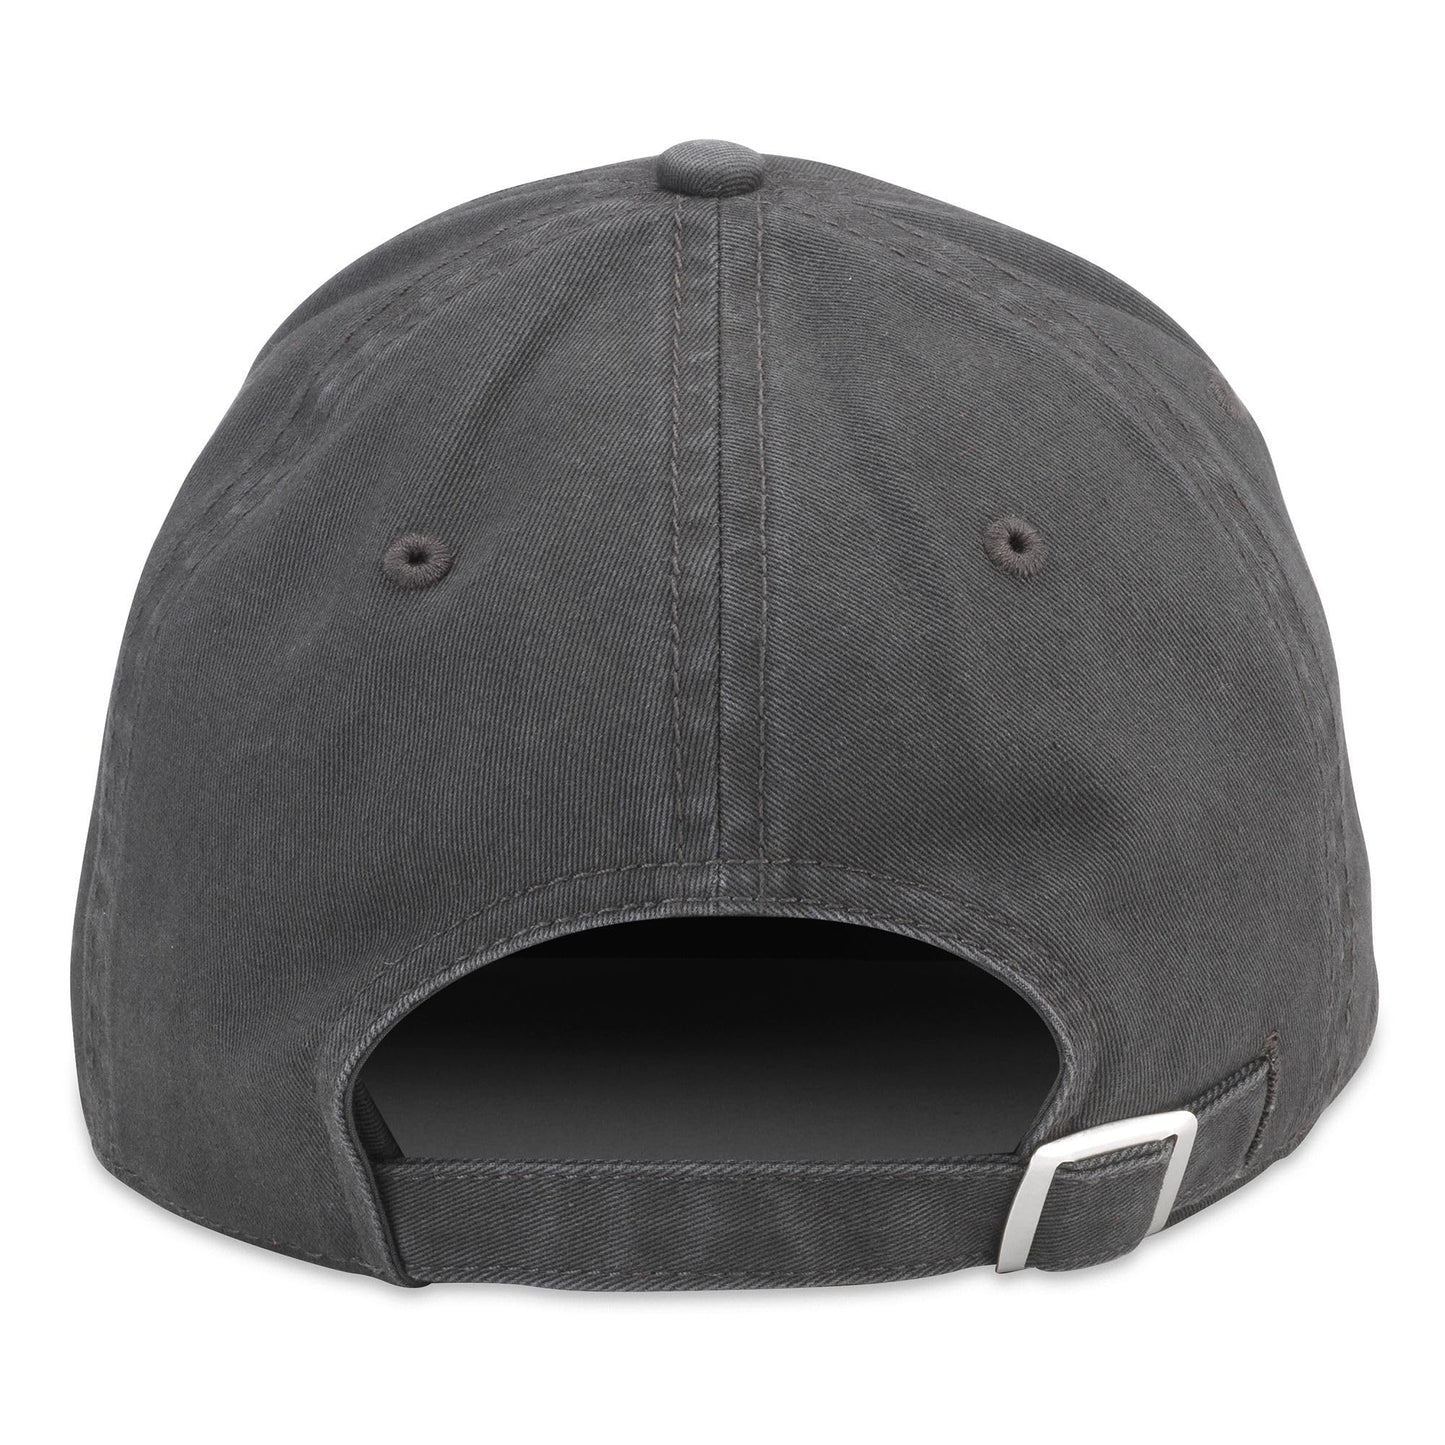 AMERICAN NEEDLE Rolling Stones Iconic Adjustable Buckle Strap Baseball Hat, Black (43910A-RLSTONE-BLK)